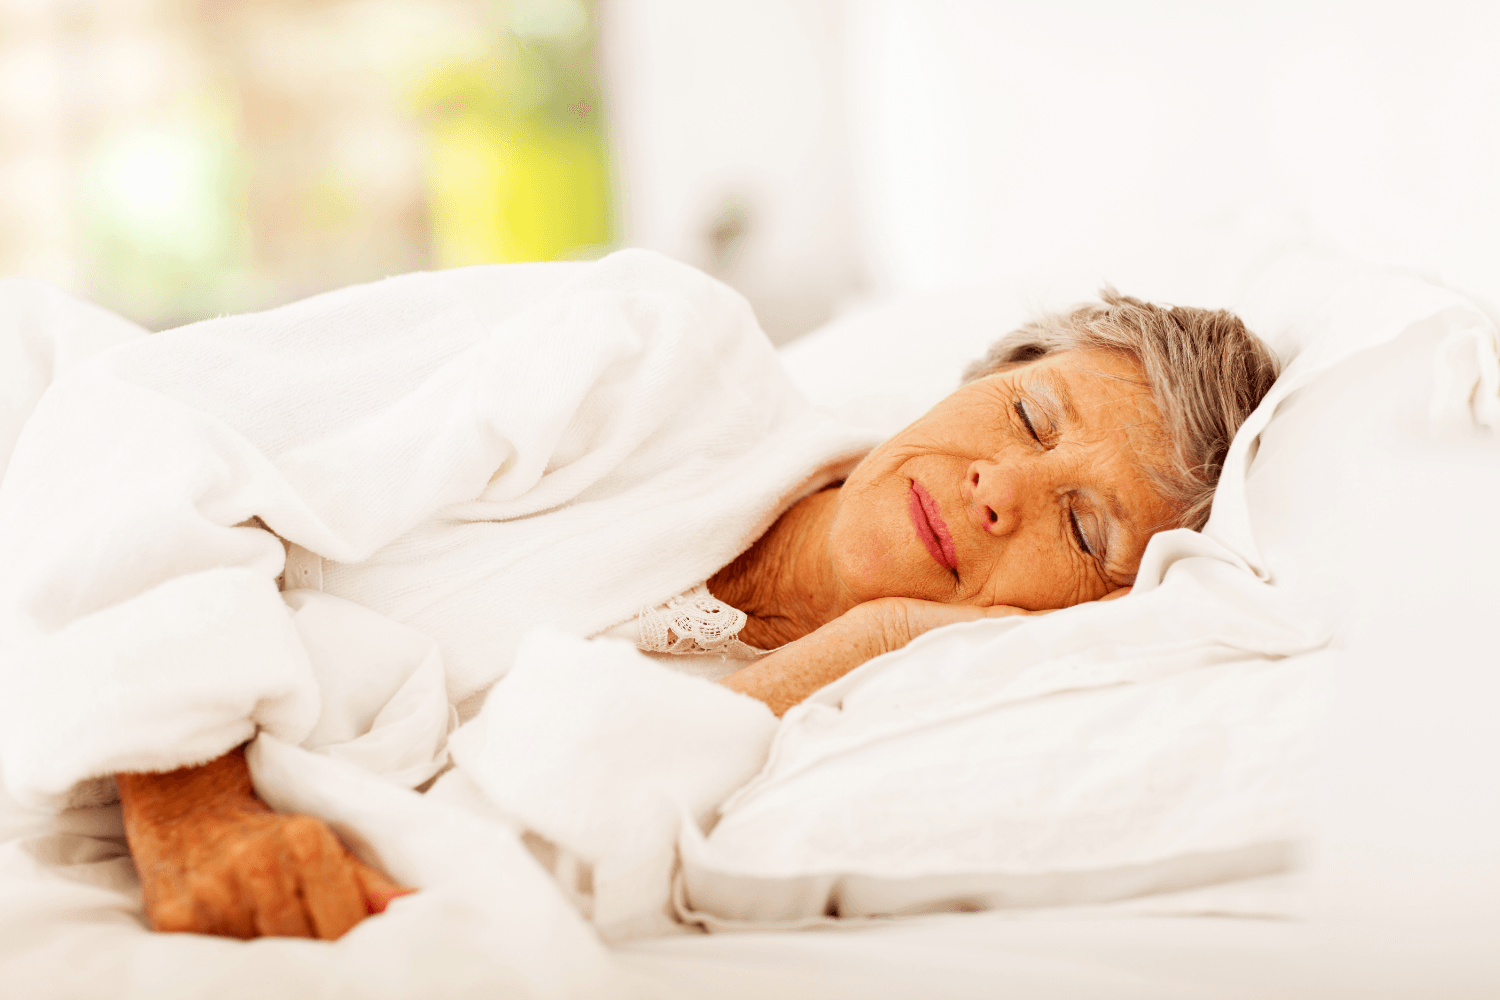 Older woman sleeping comfortably